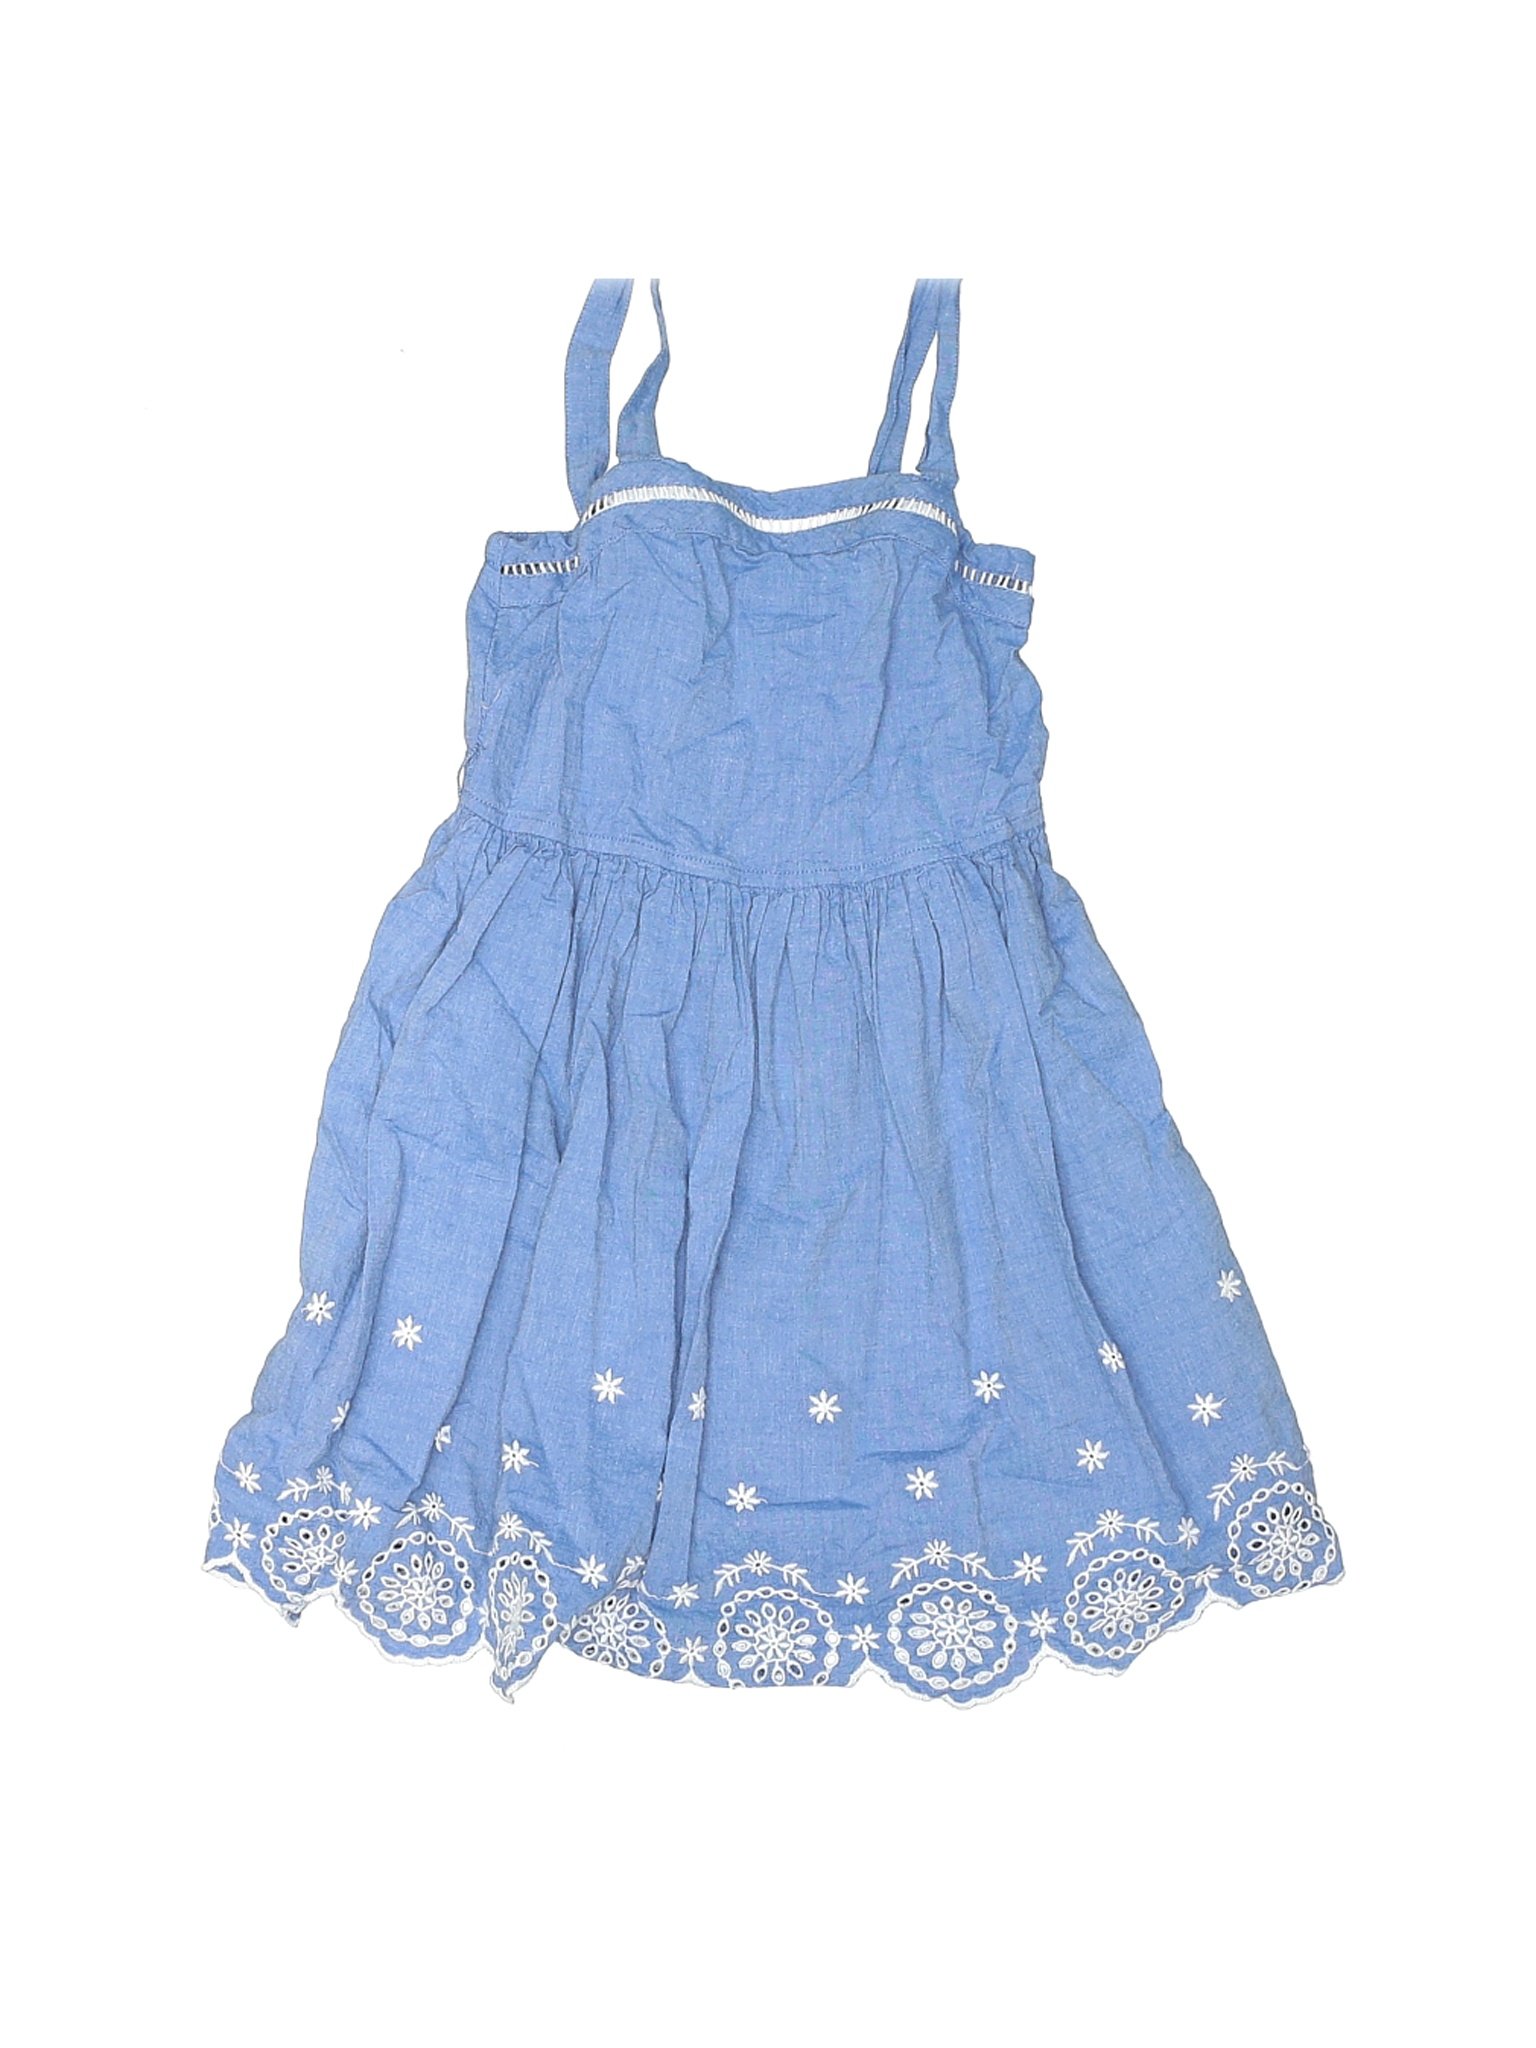 Cat & Jack Girls Blue Dress 6 | eBay